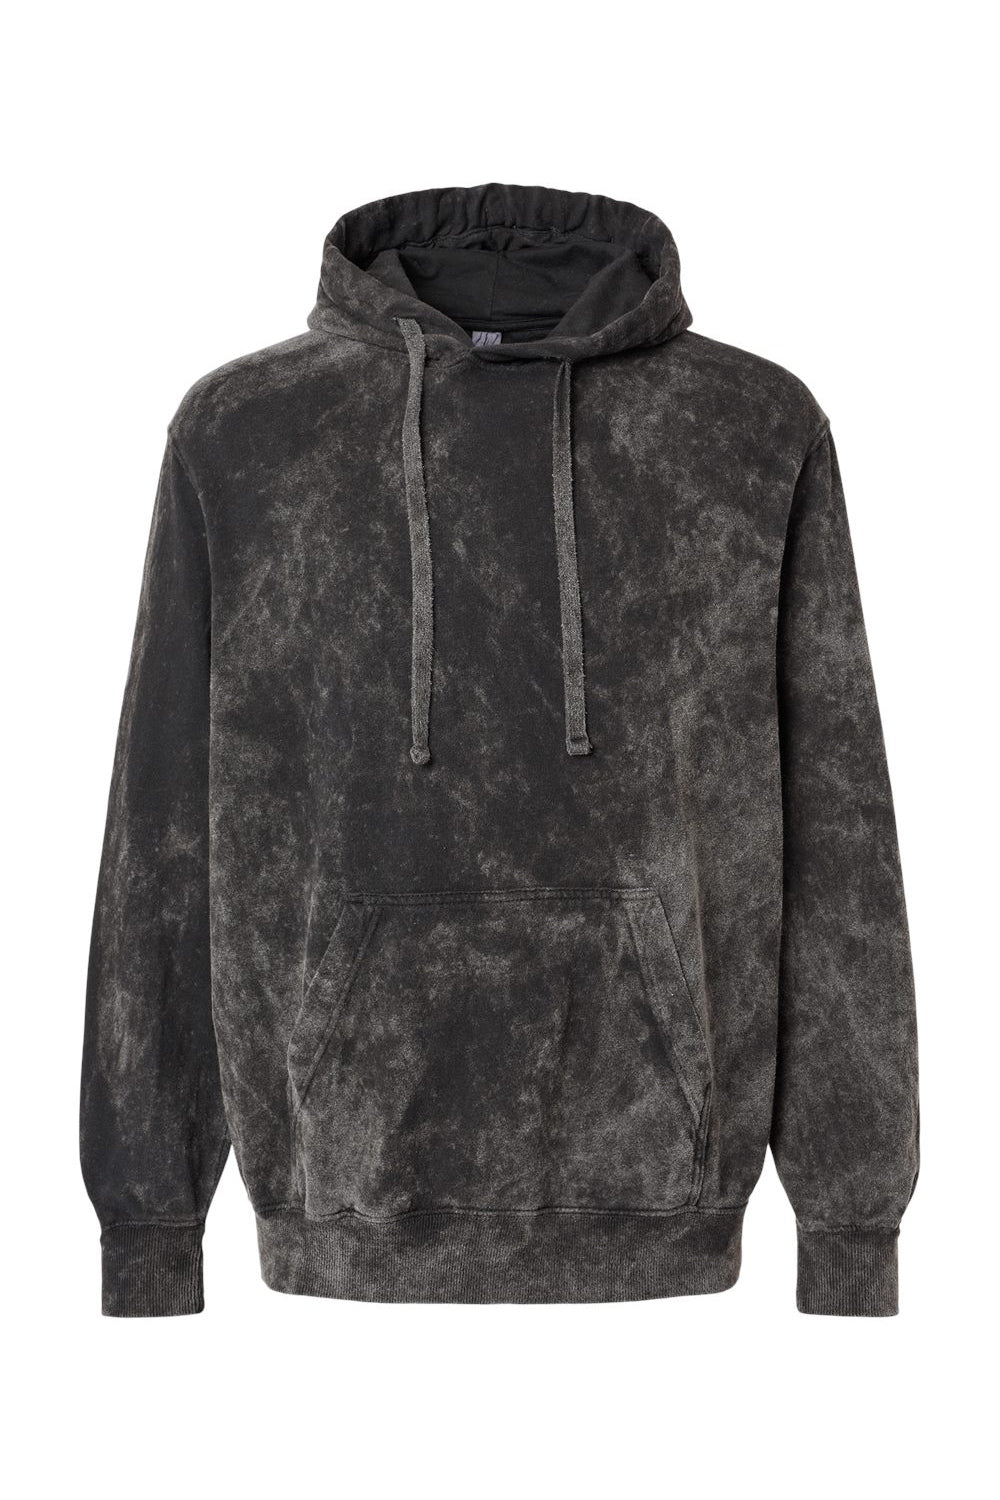 Dyenomite 854MW Mens Premium Fleece Mineral Wash Hooded Sweatshirt Hoodie Black Mineral Wash Flat Front